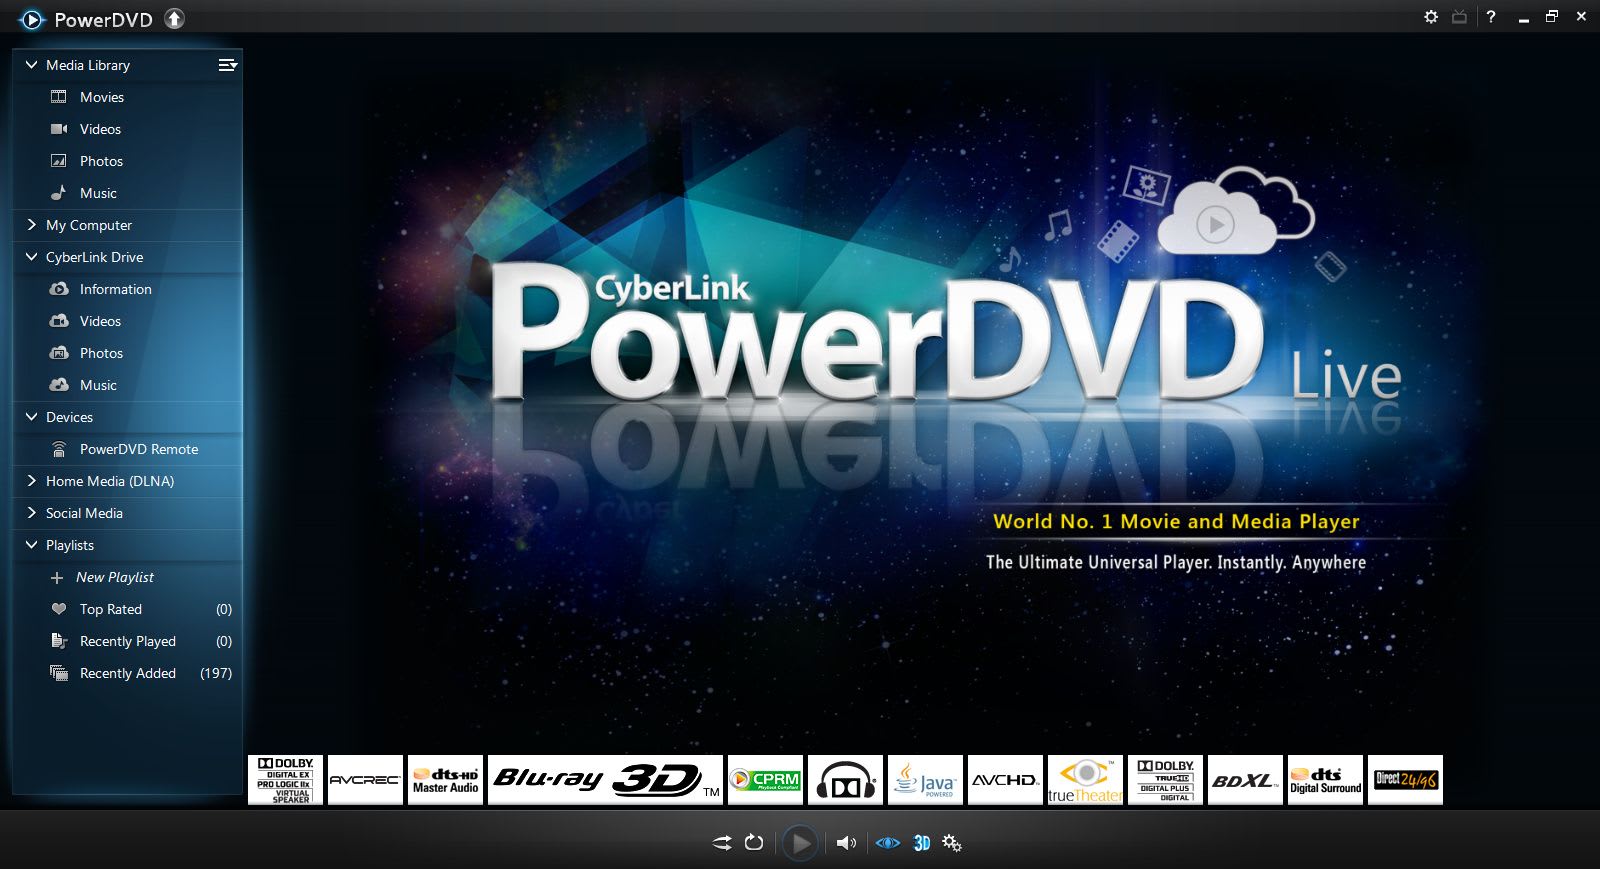 powerdvd 12 won t play dvd